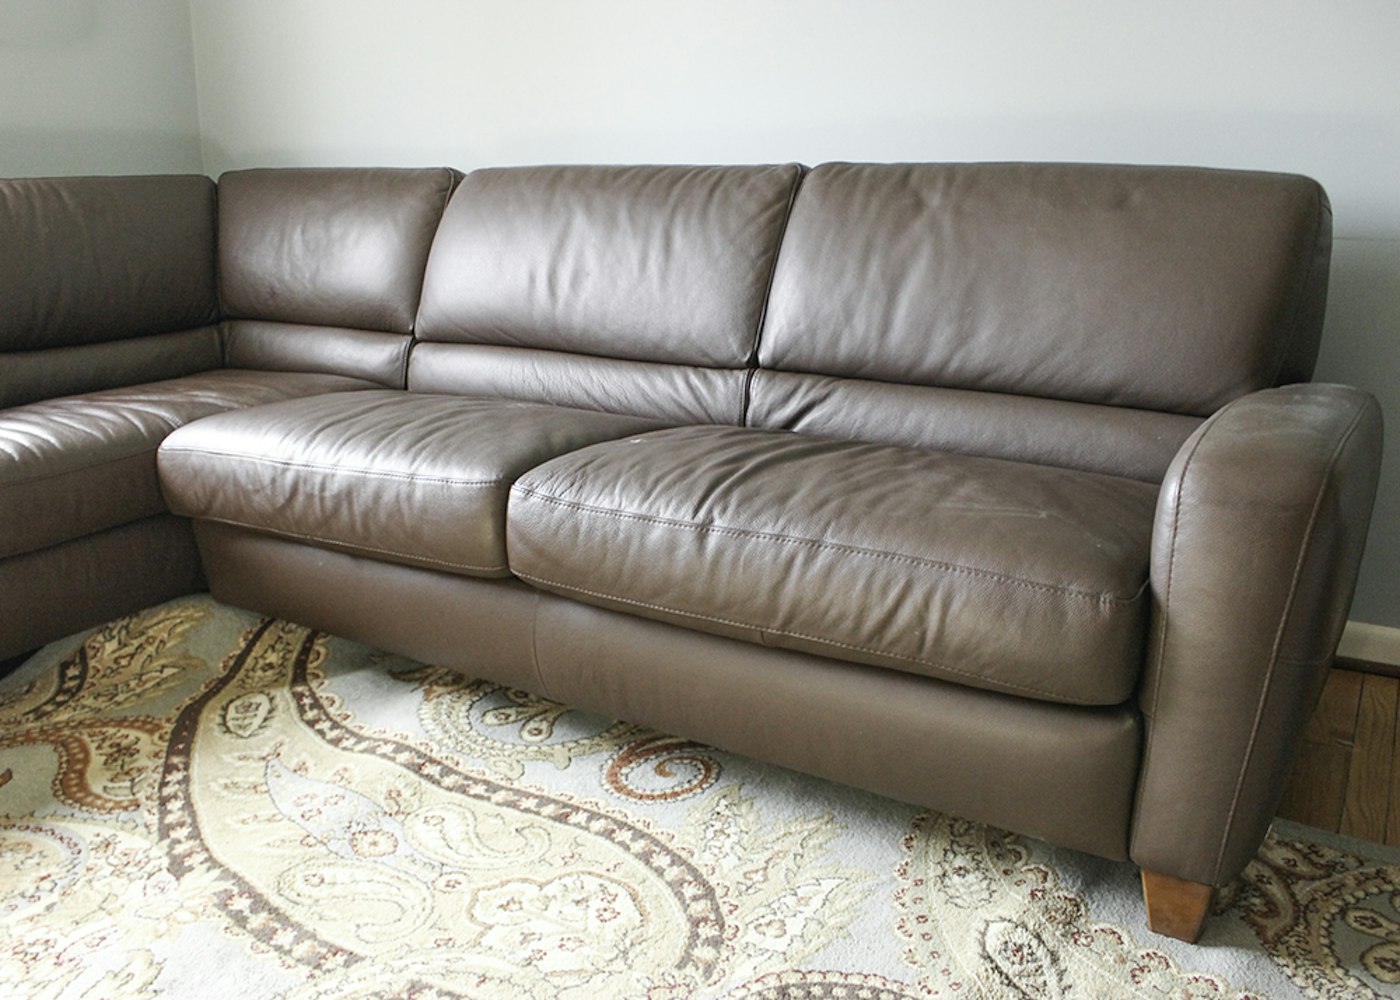 Italsofa Leather Sectional Sleeper Sofa | EBTH